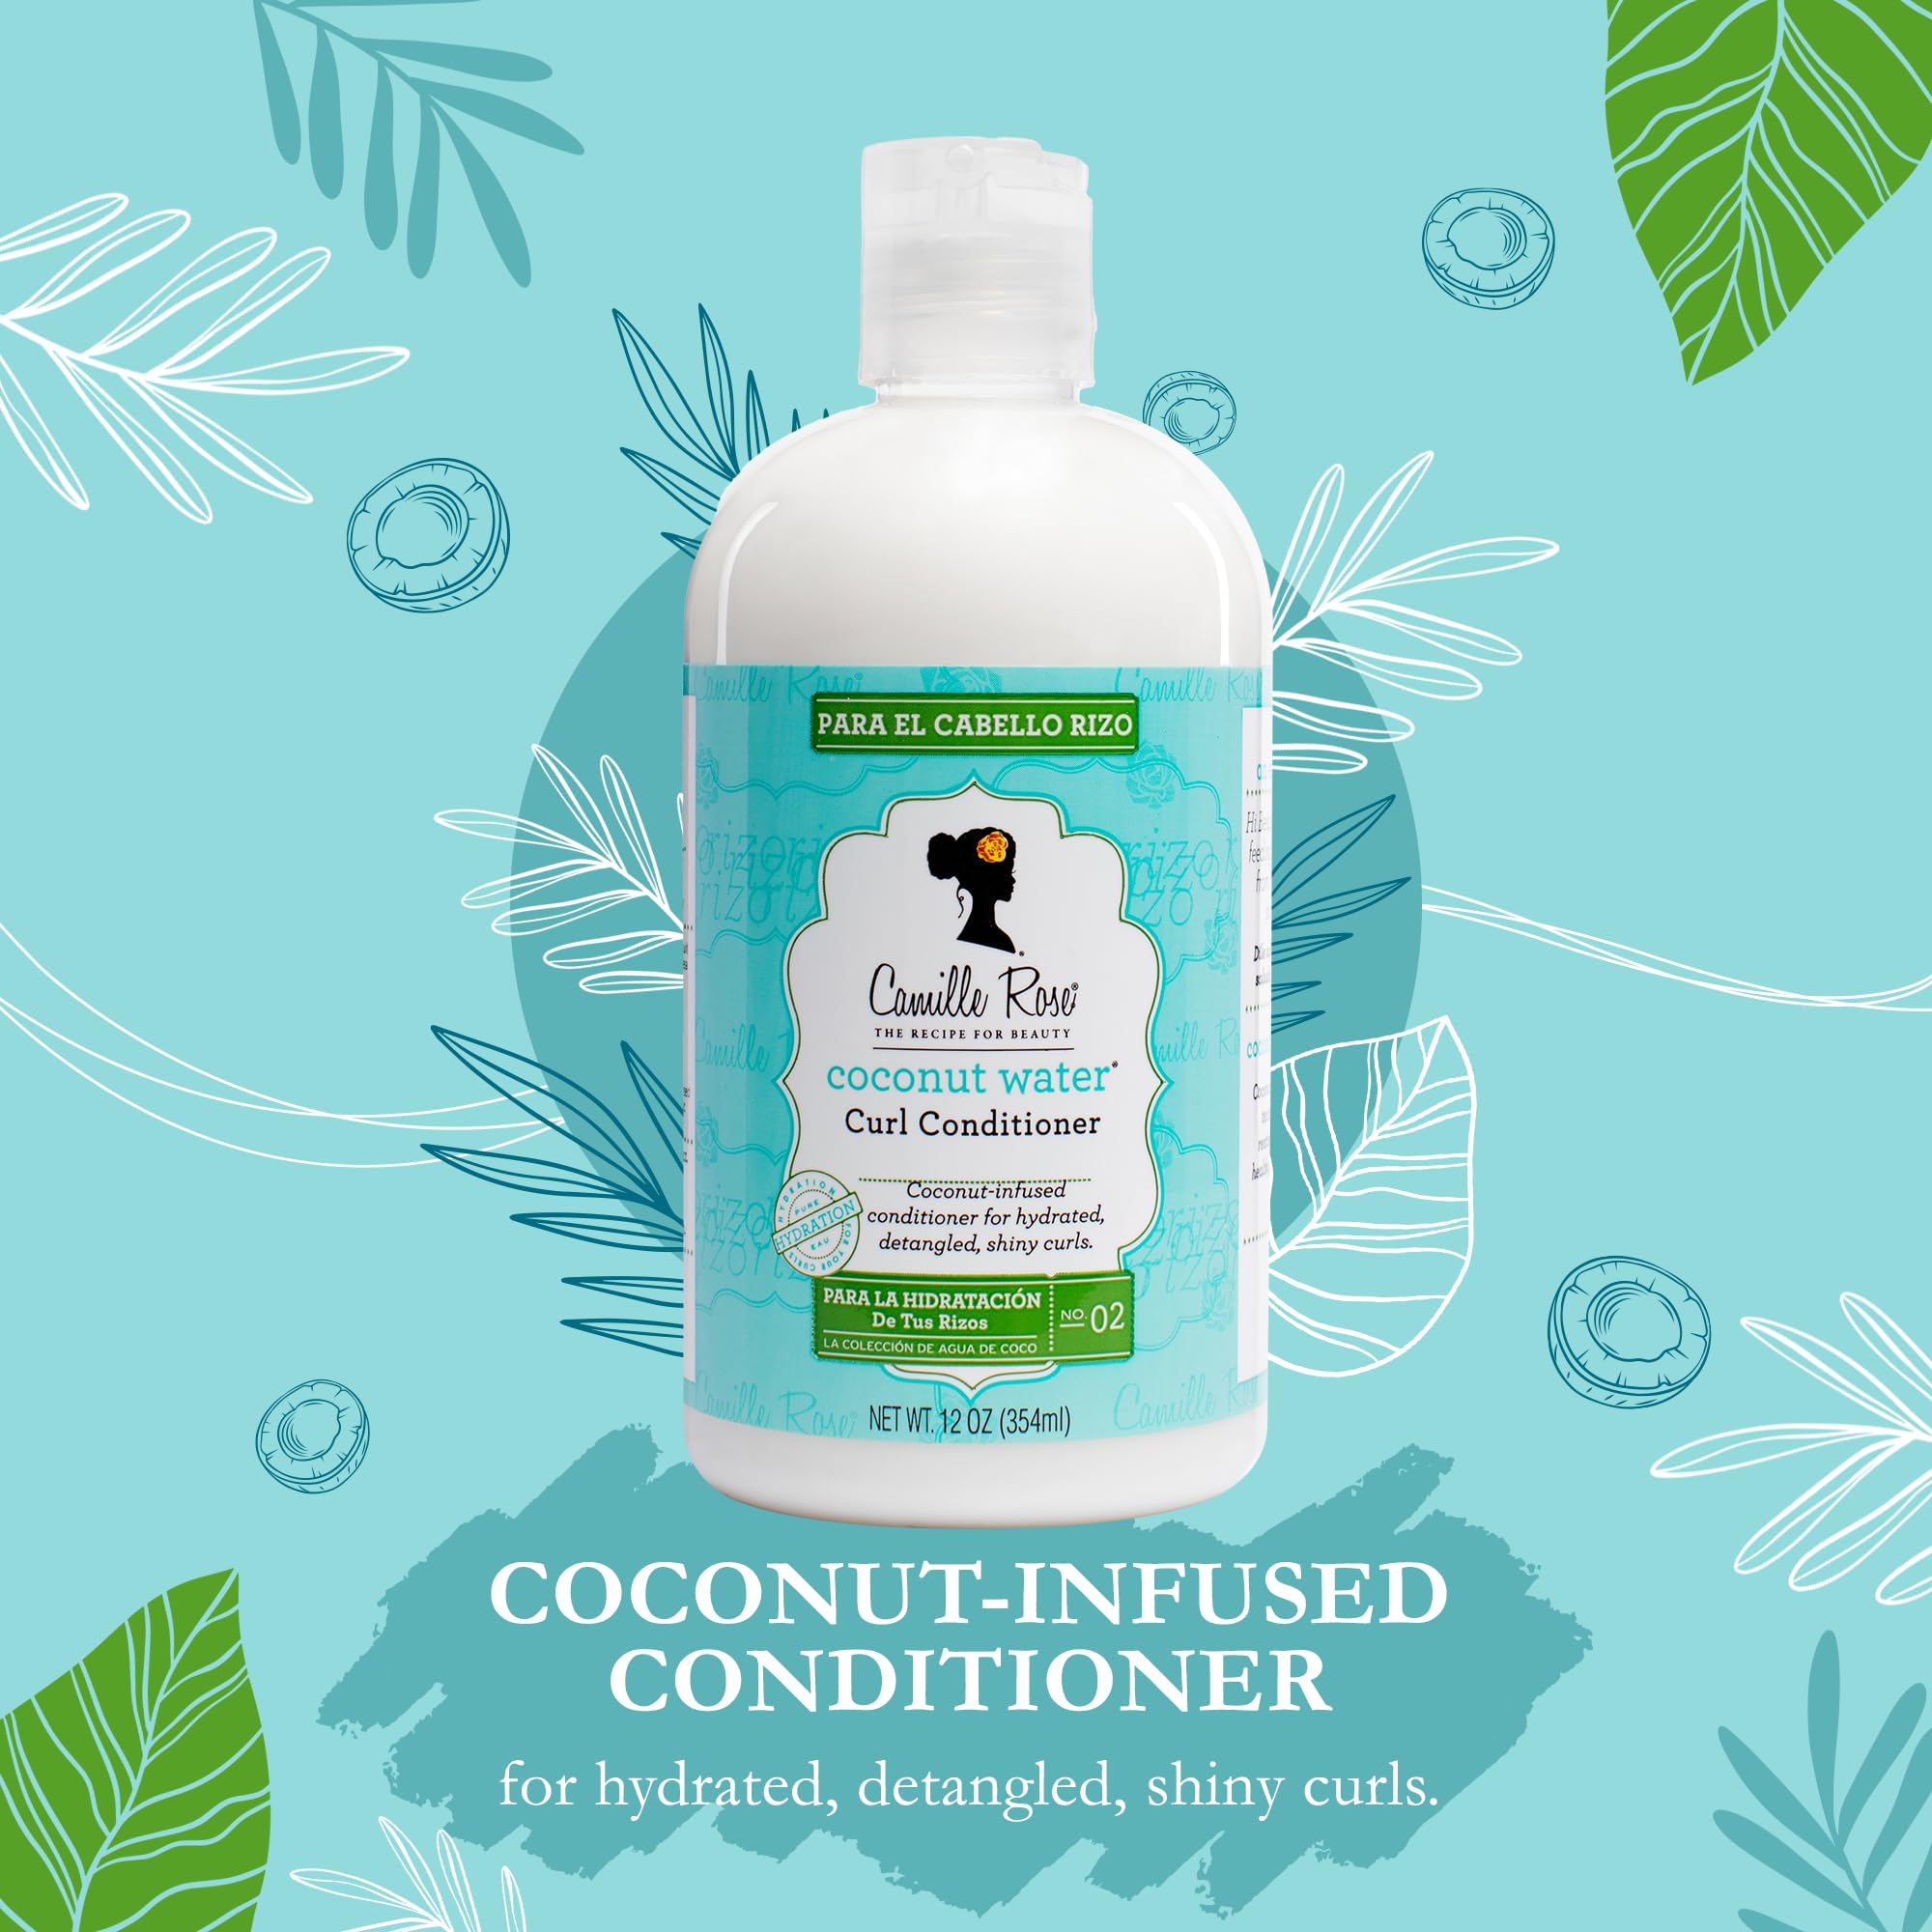 Camille Rose Coconut Water Conditioner | 12 fl oz | Natural Coconut Oil, Rosemary Oil, Castor Oil